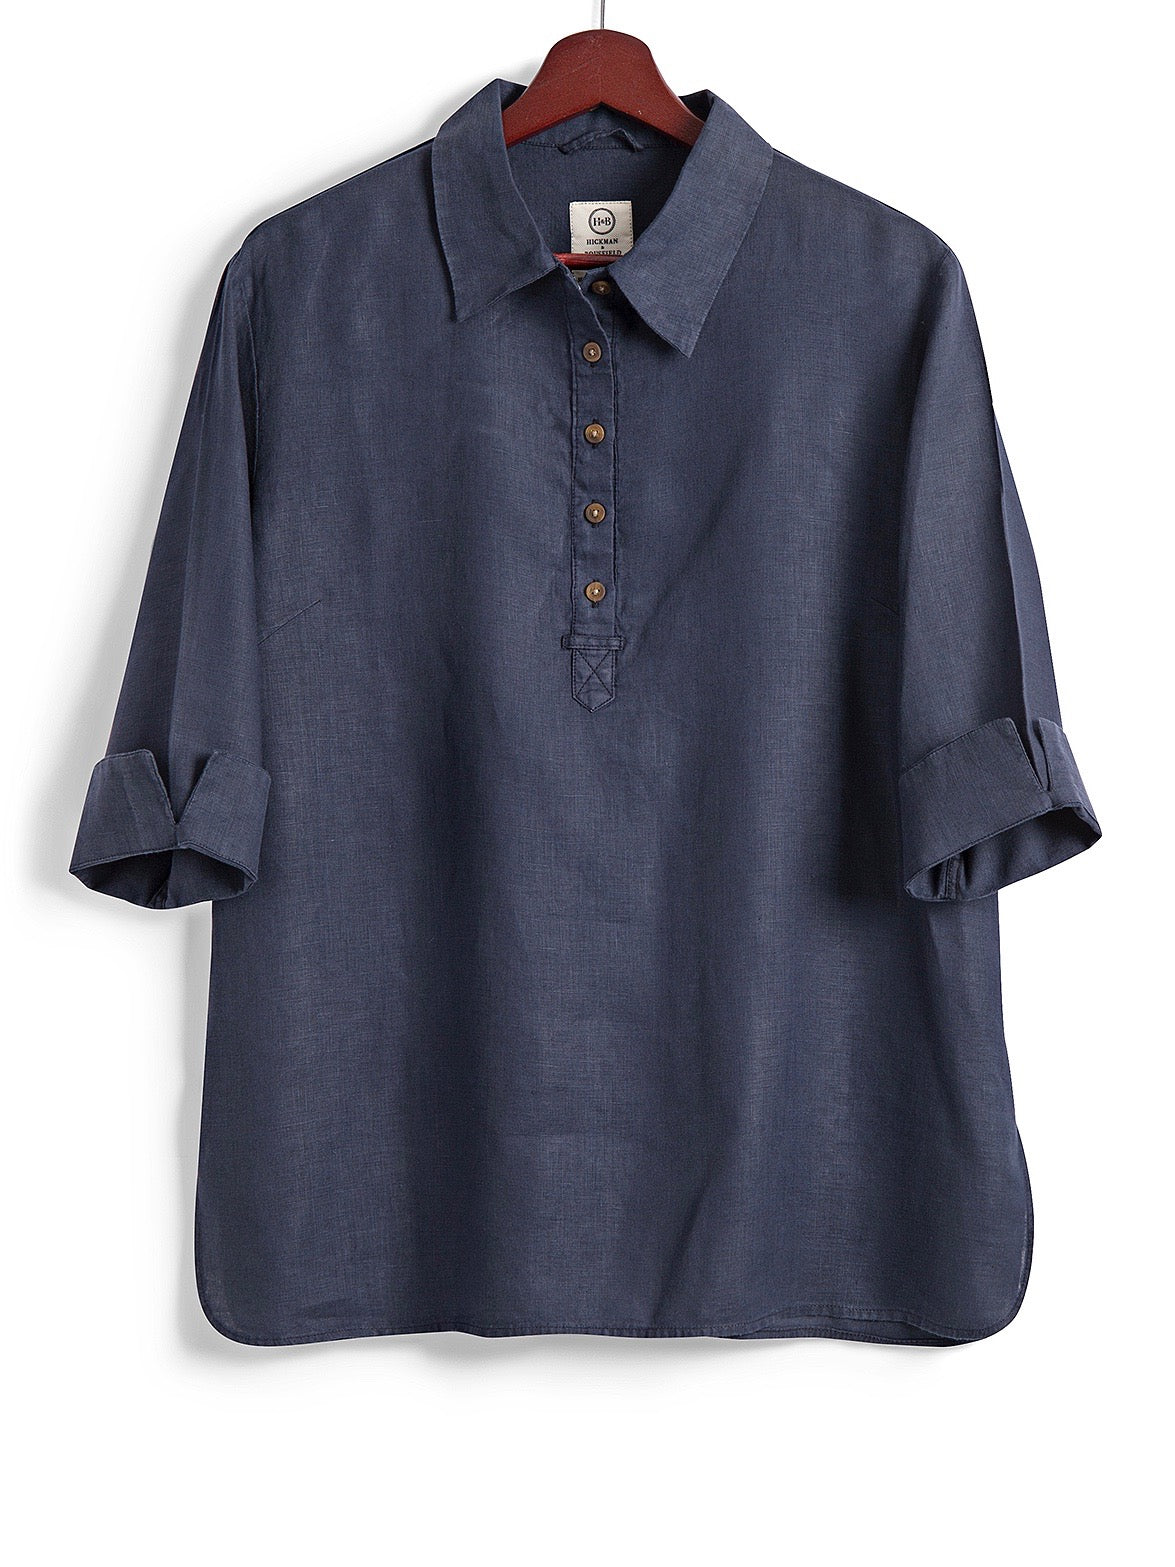 Safari Shirt in Navy Linen, Shirt, Hickman & Bousfied - Hickman & Bousfield, Safari and Travel Clothing